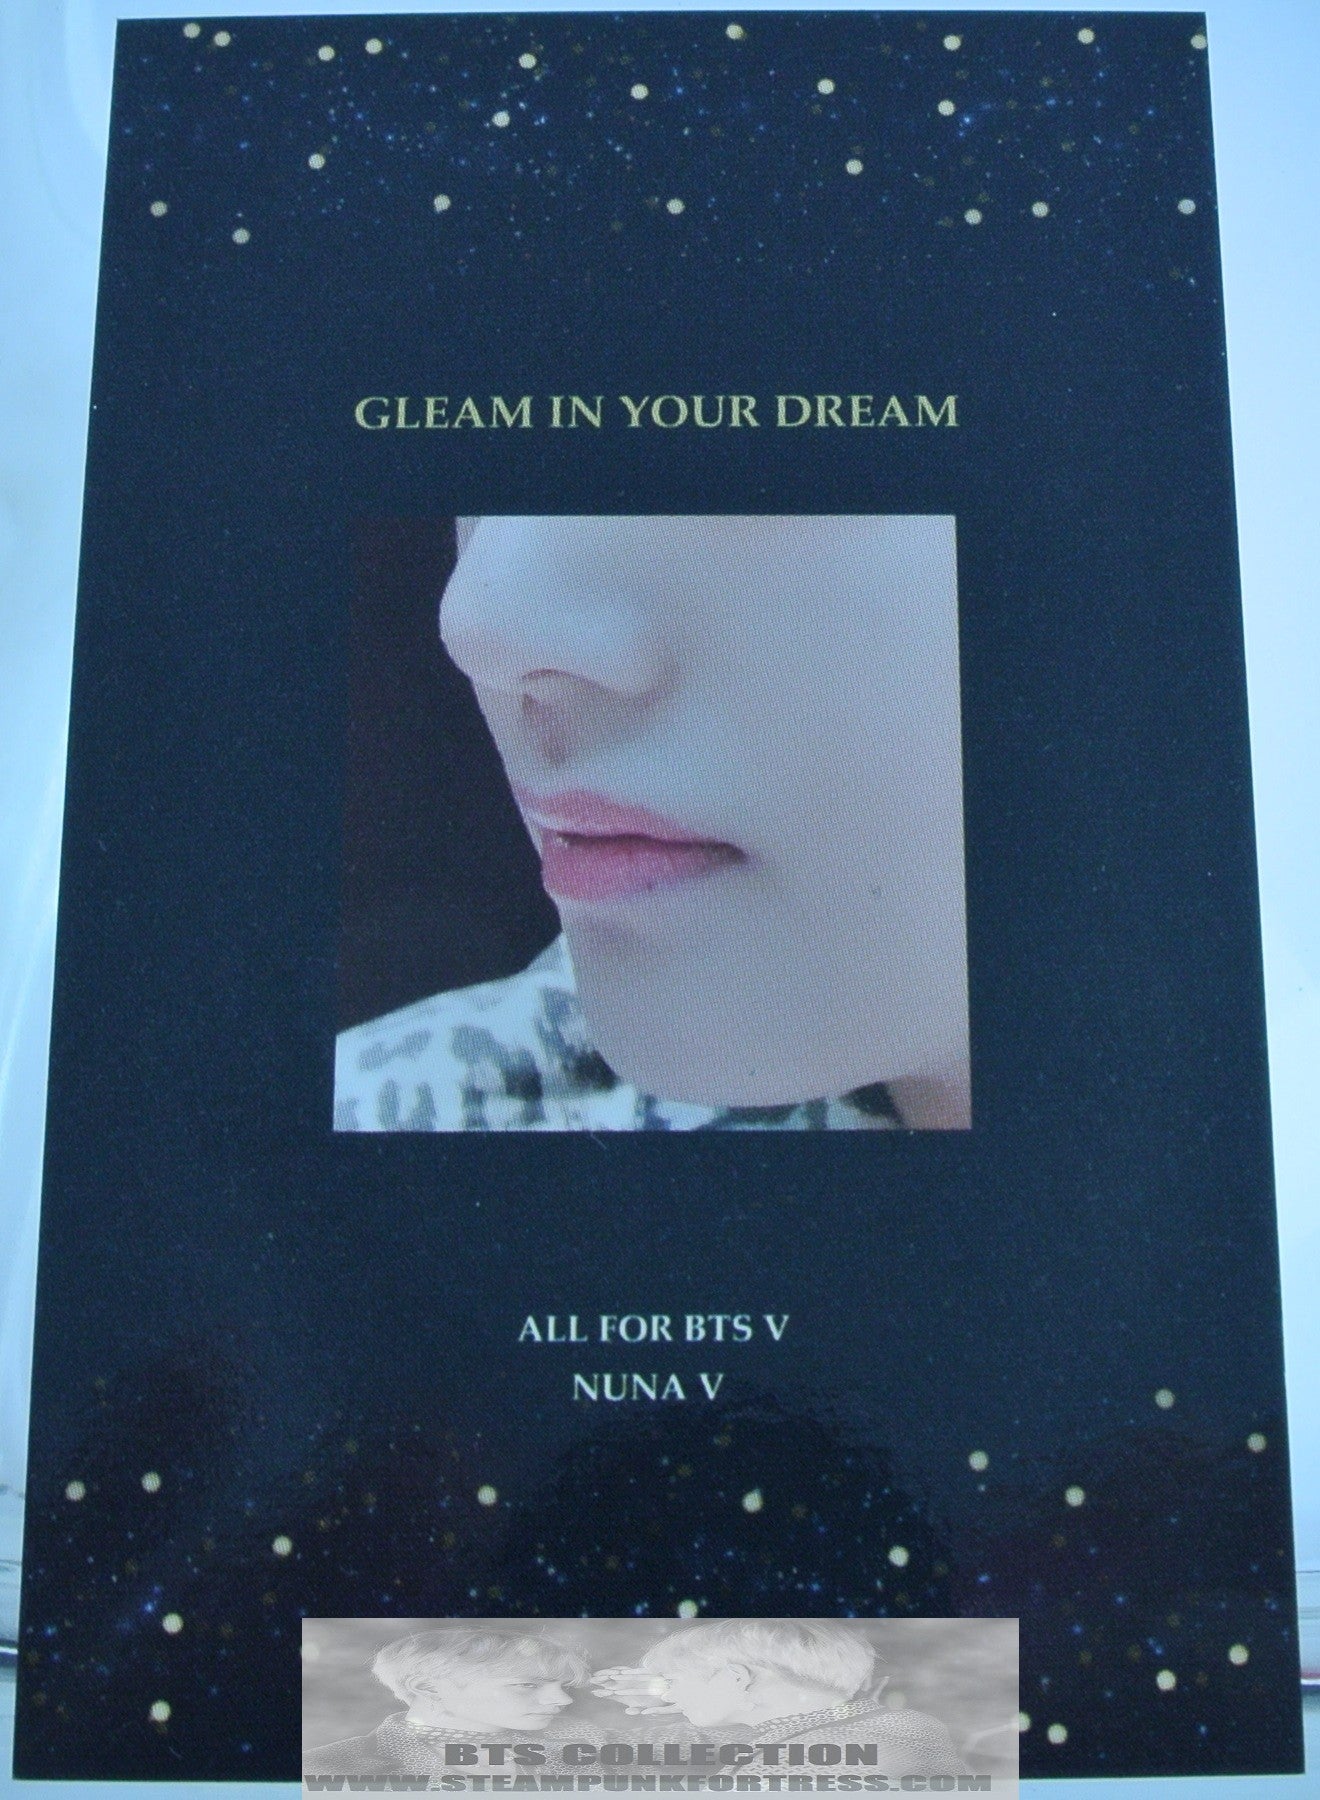 BTS V KIM TAEHYUNG FANSITE PHOTOCARD LEOPARD JACKET GLEAM IN YOUR DREAM NUNA V PHOTO CARD